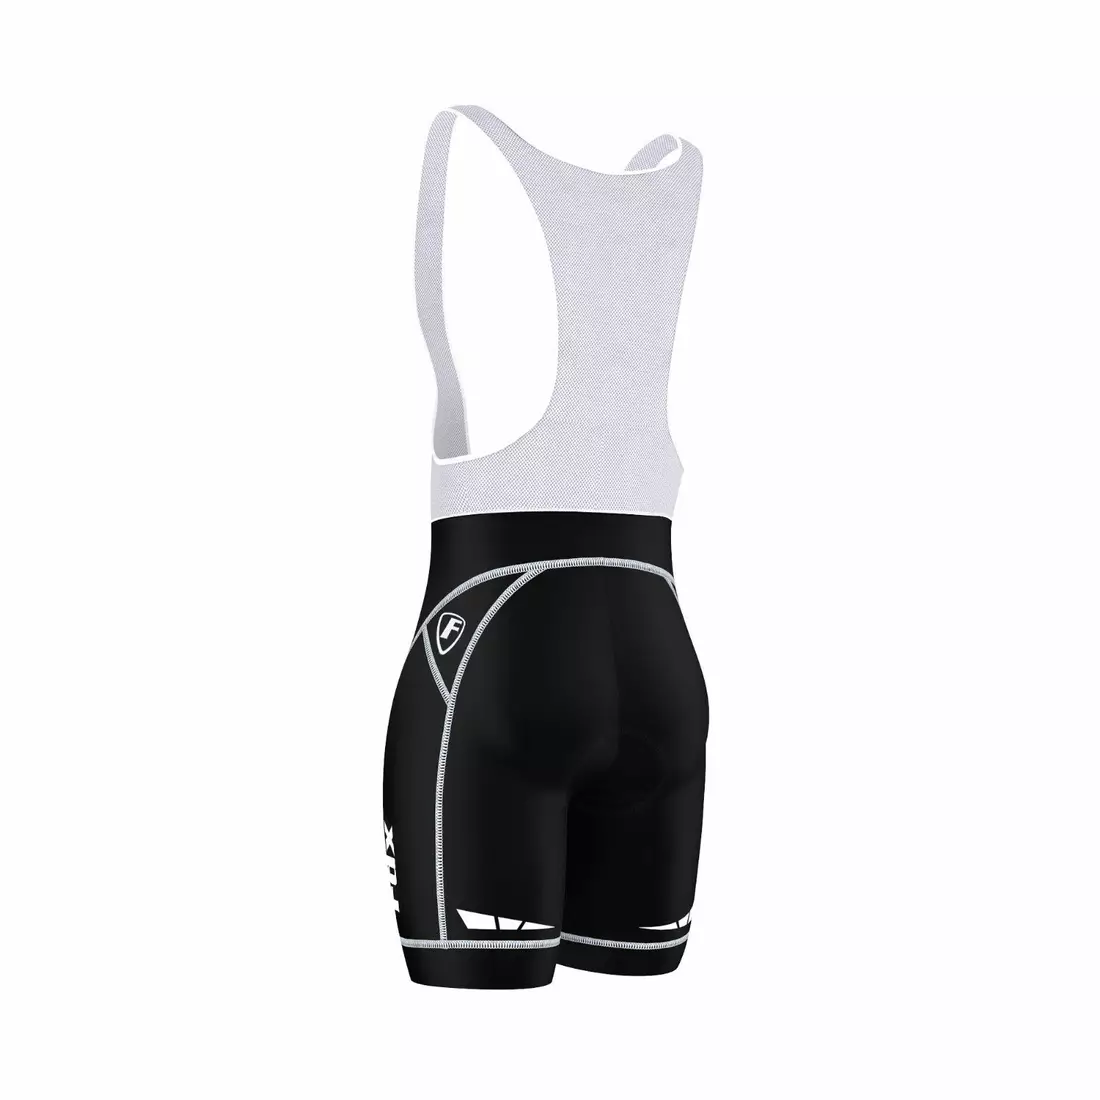 FDX 970 men's bib shorts, black and white